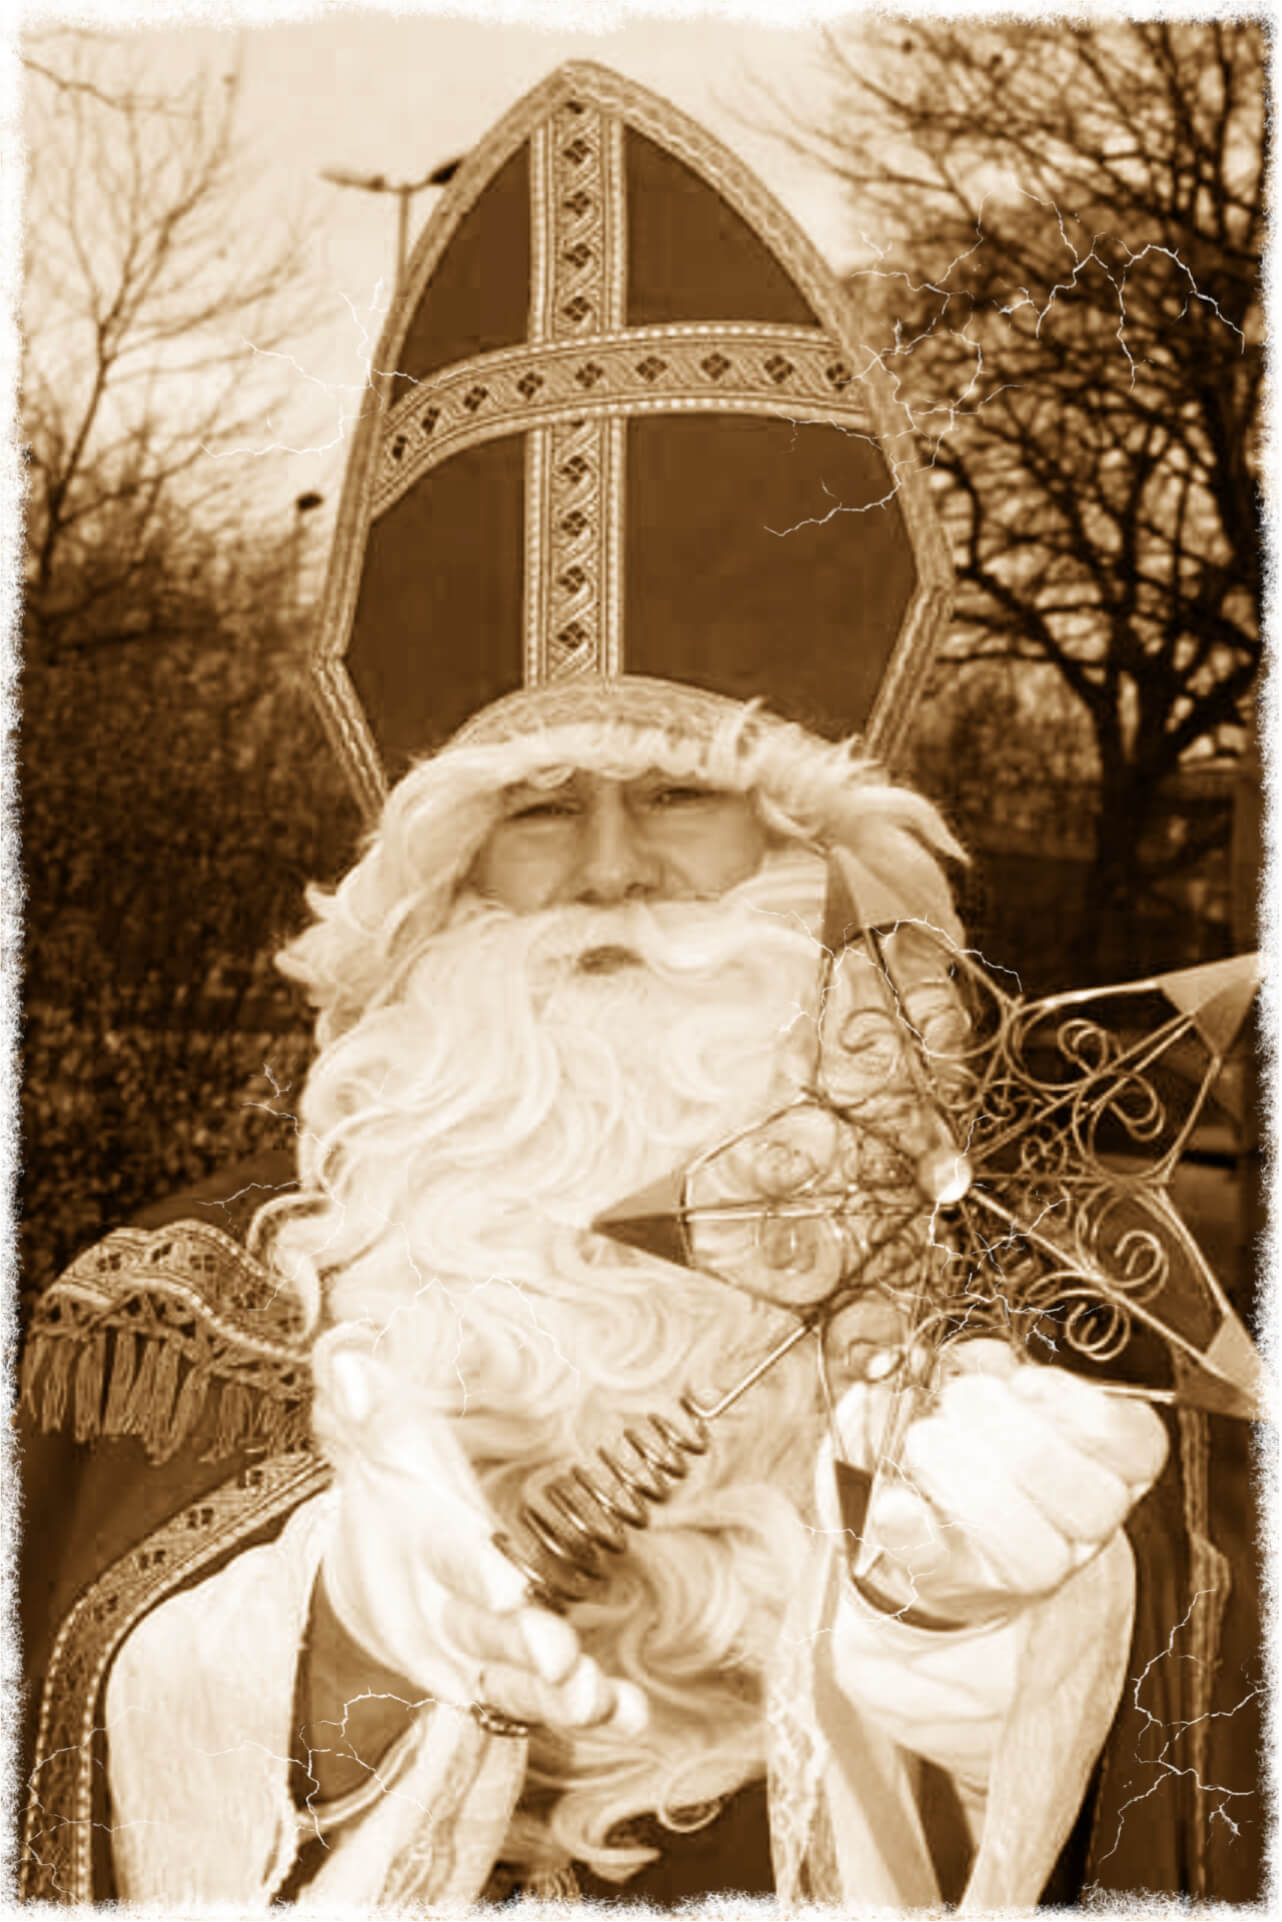 Santa Claus in a bishop's costume